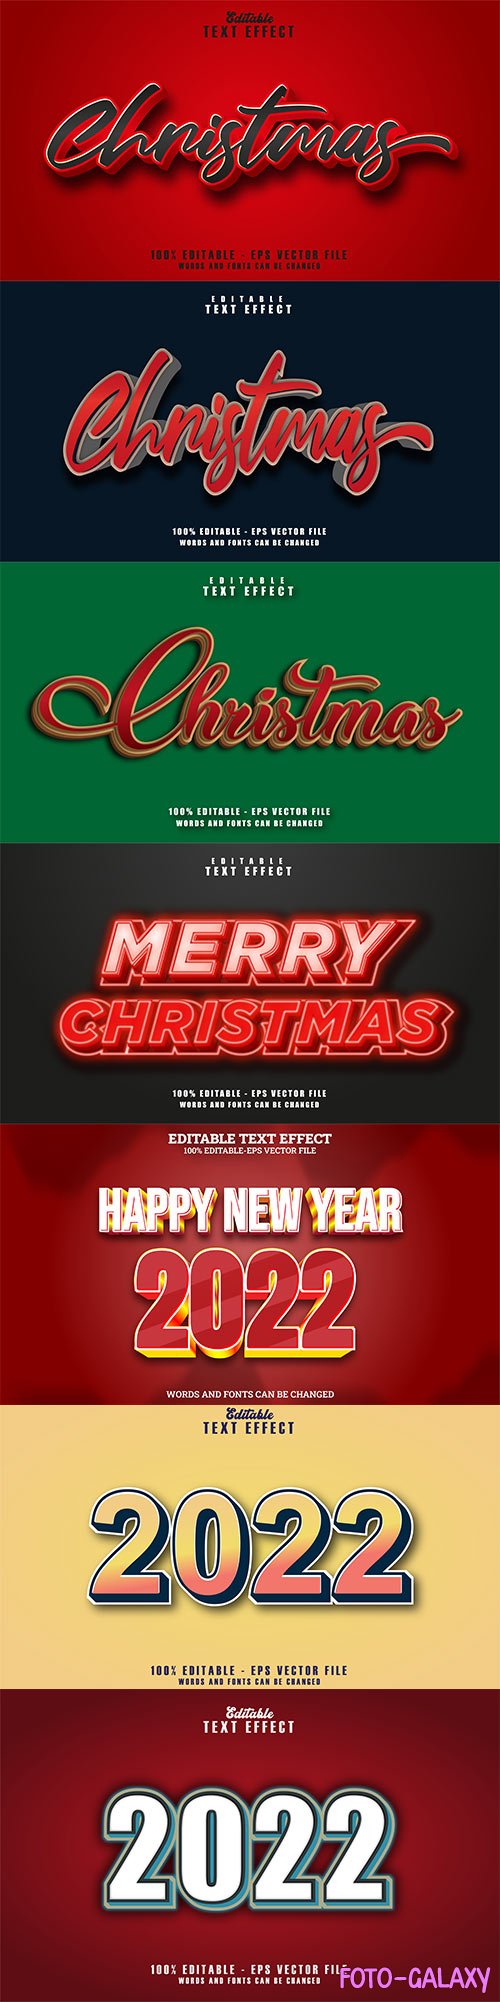 2022 text effect, Christmas text vector